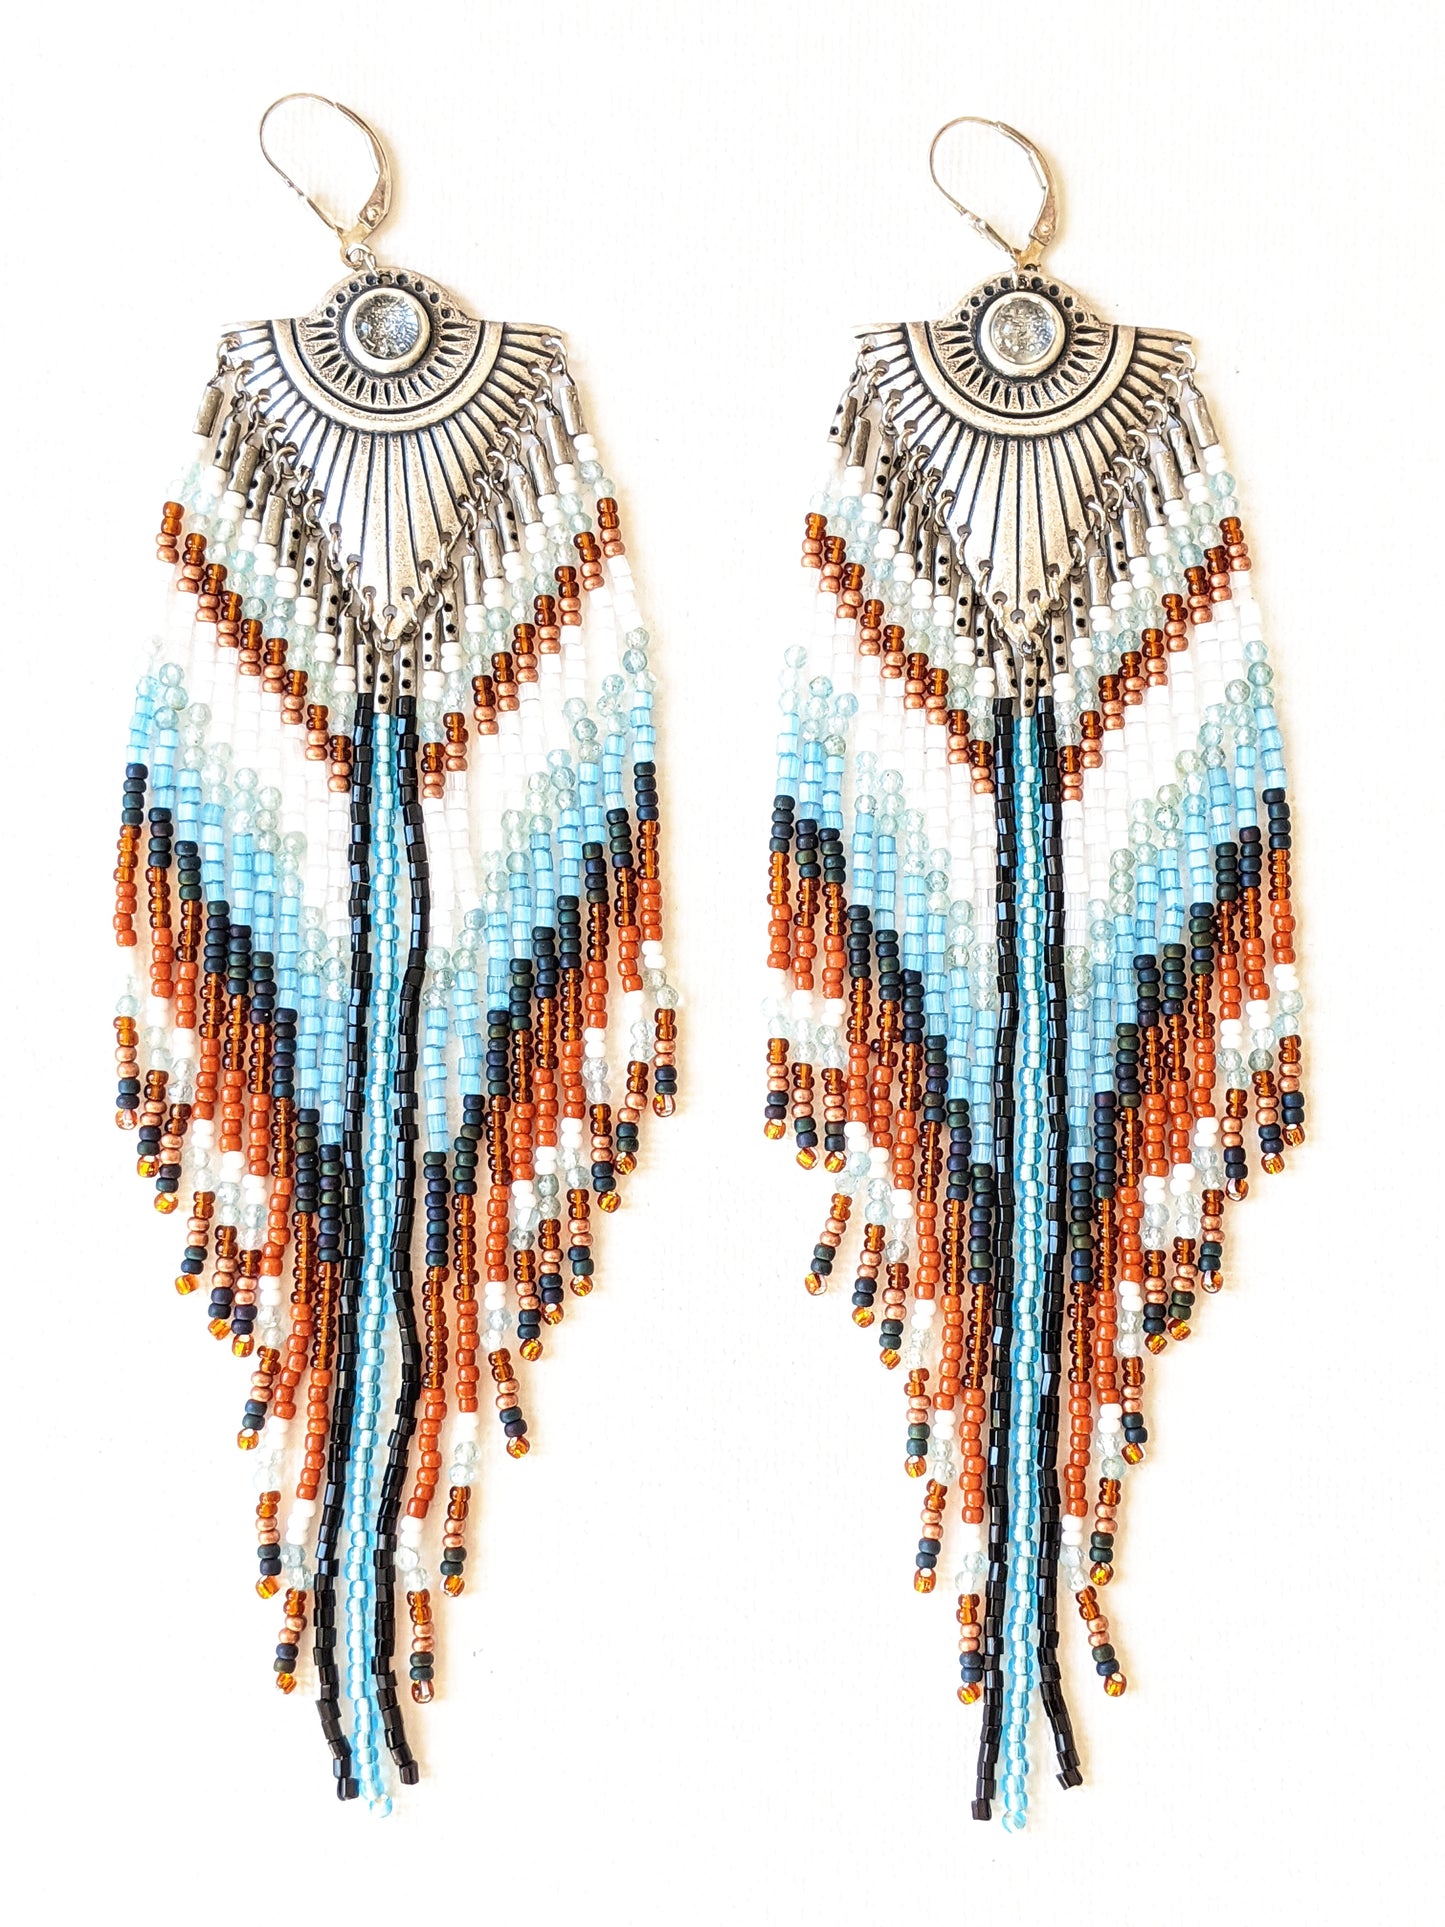 Michelle Arizona Waterfall Native Earrings